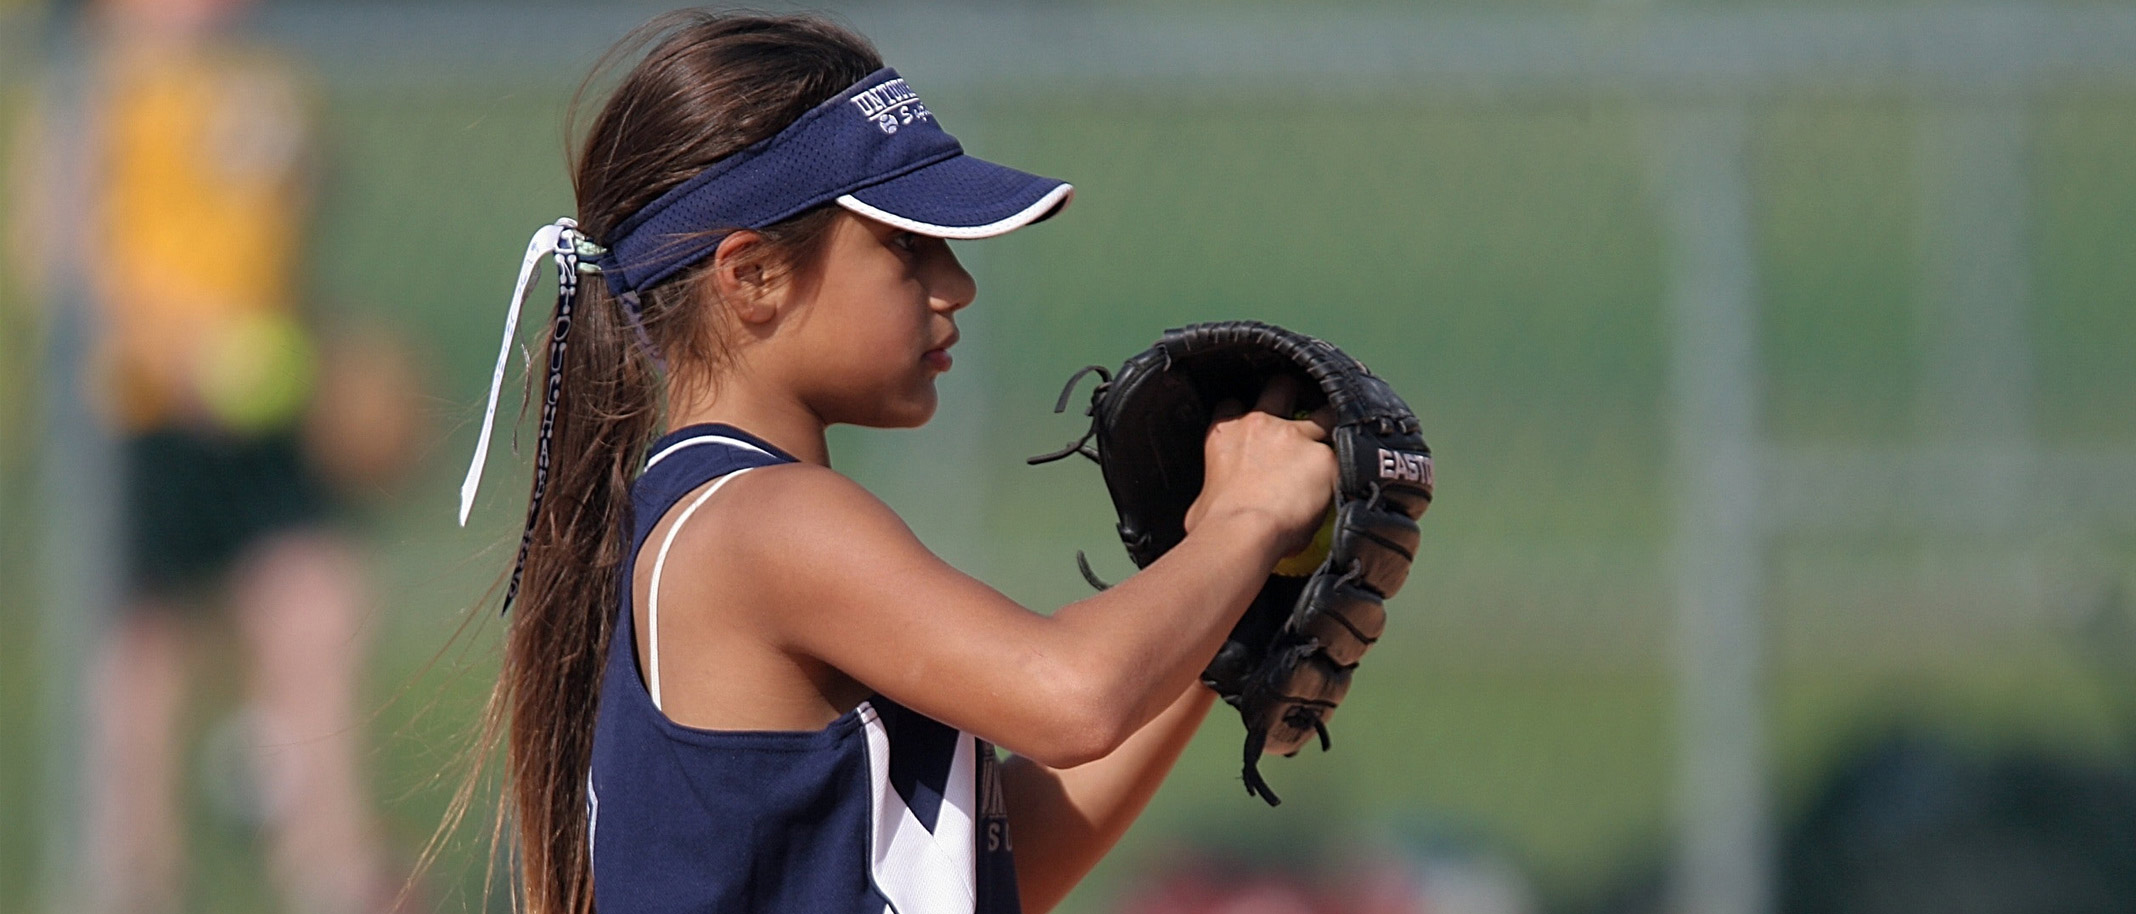 girl-active-baseball-crop2160